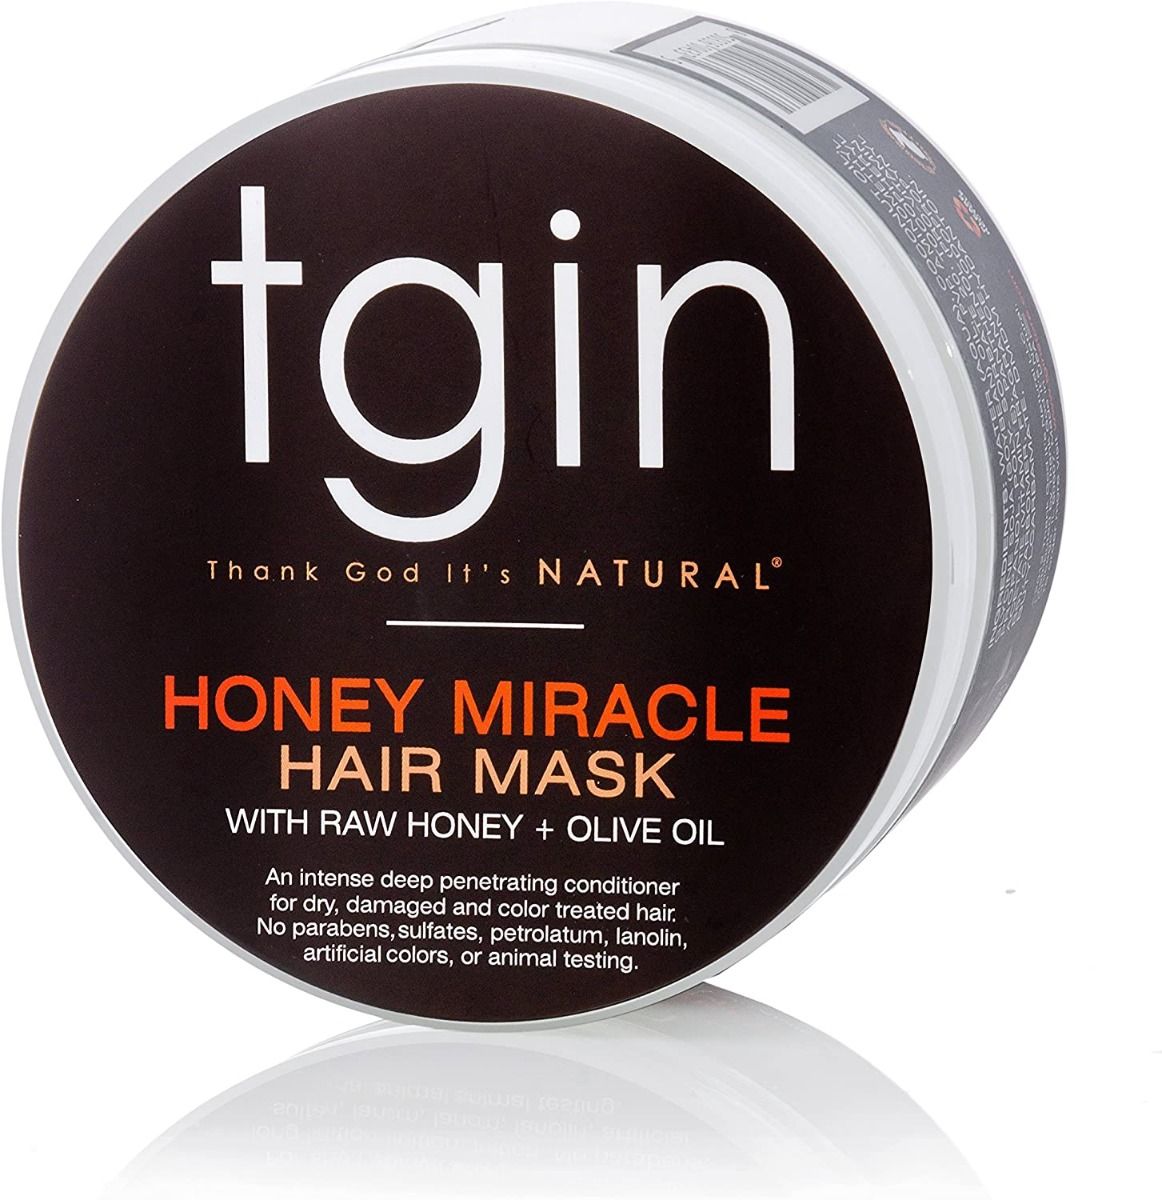 tgin Honey Miracle Hair Mask